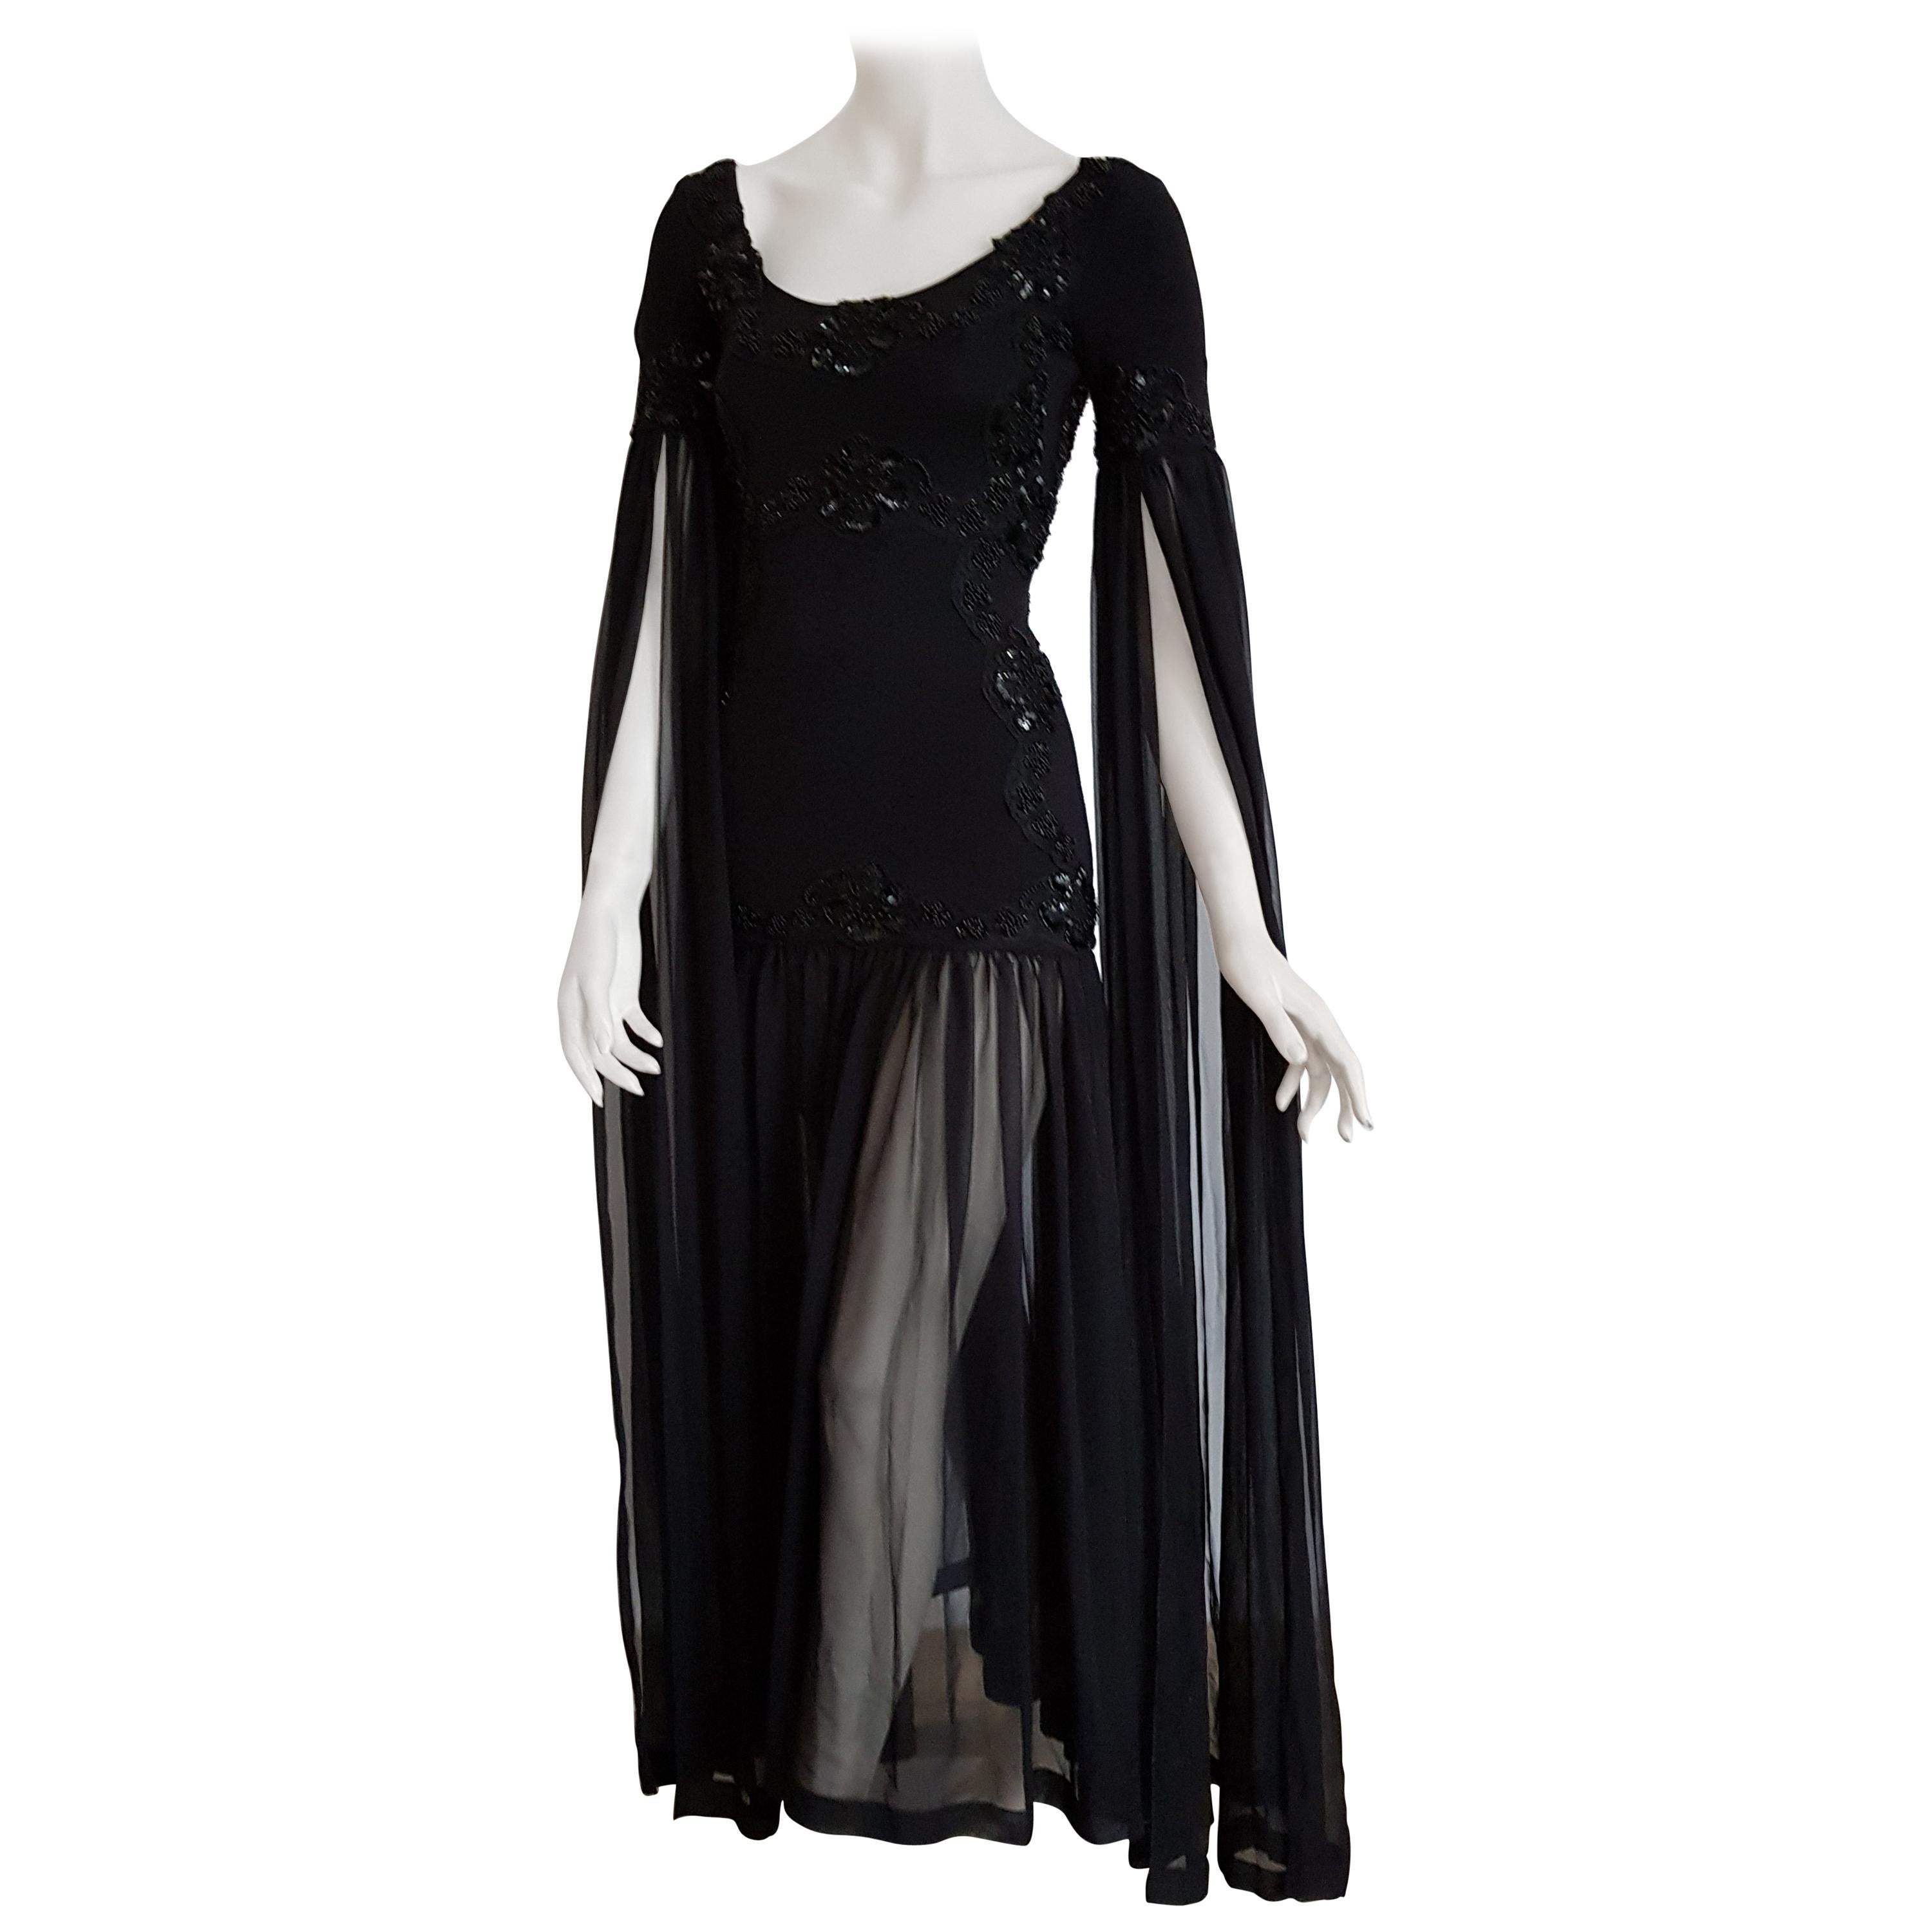 Isabelle ALLARD Paris "New" Chiffon sleeves Woolen bodice Black dress - Unworn   For Sale